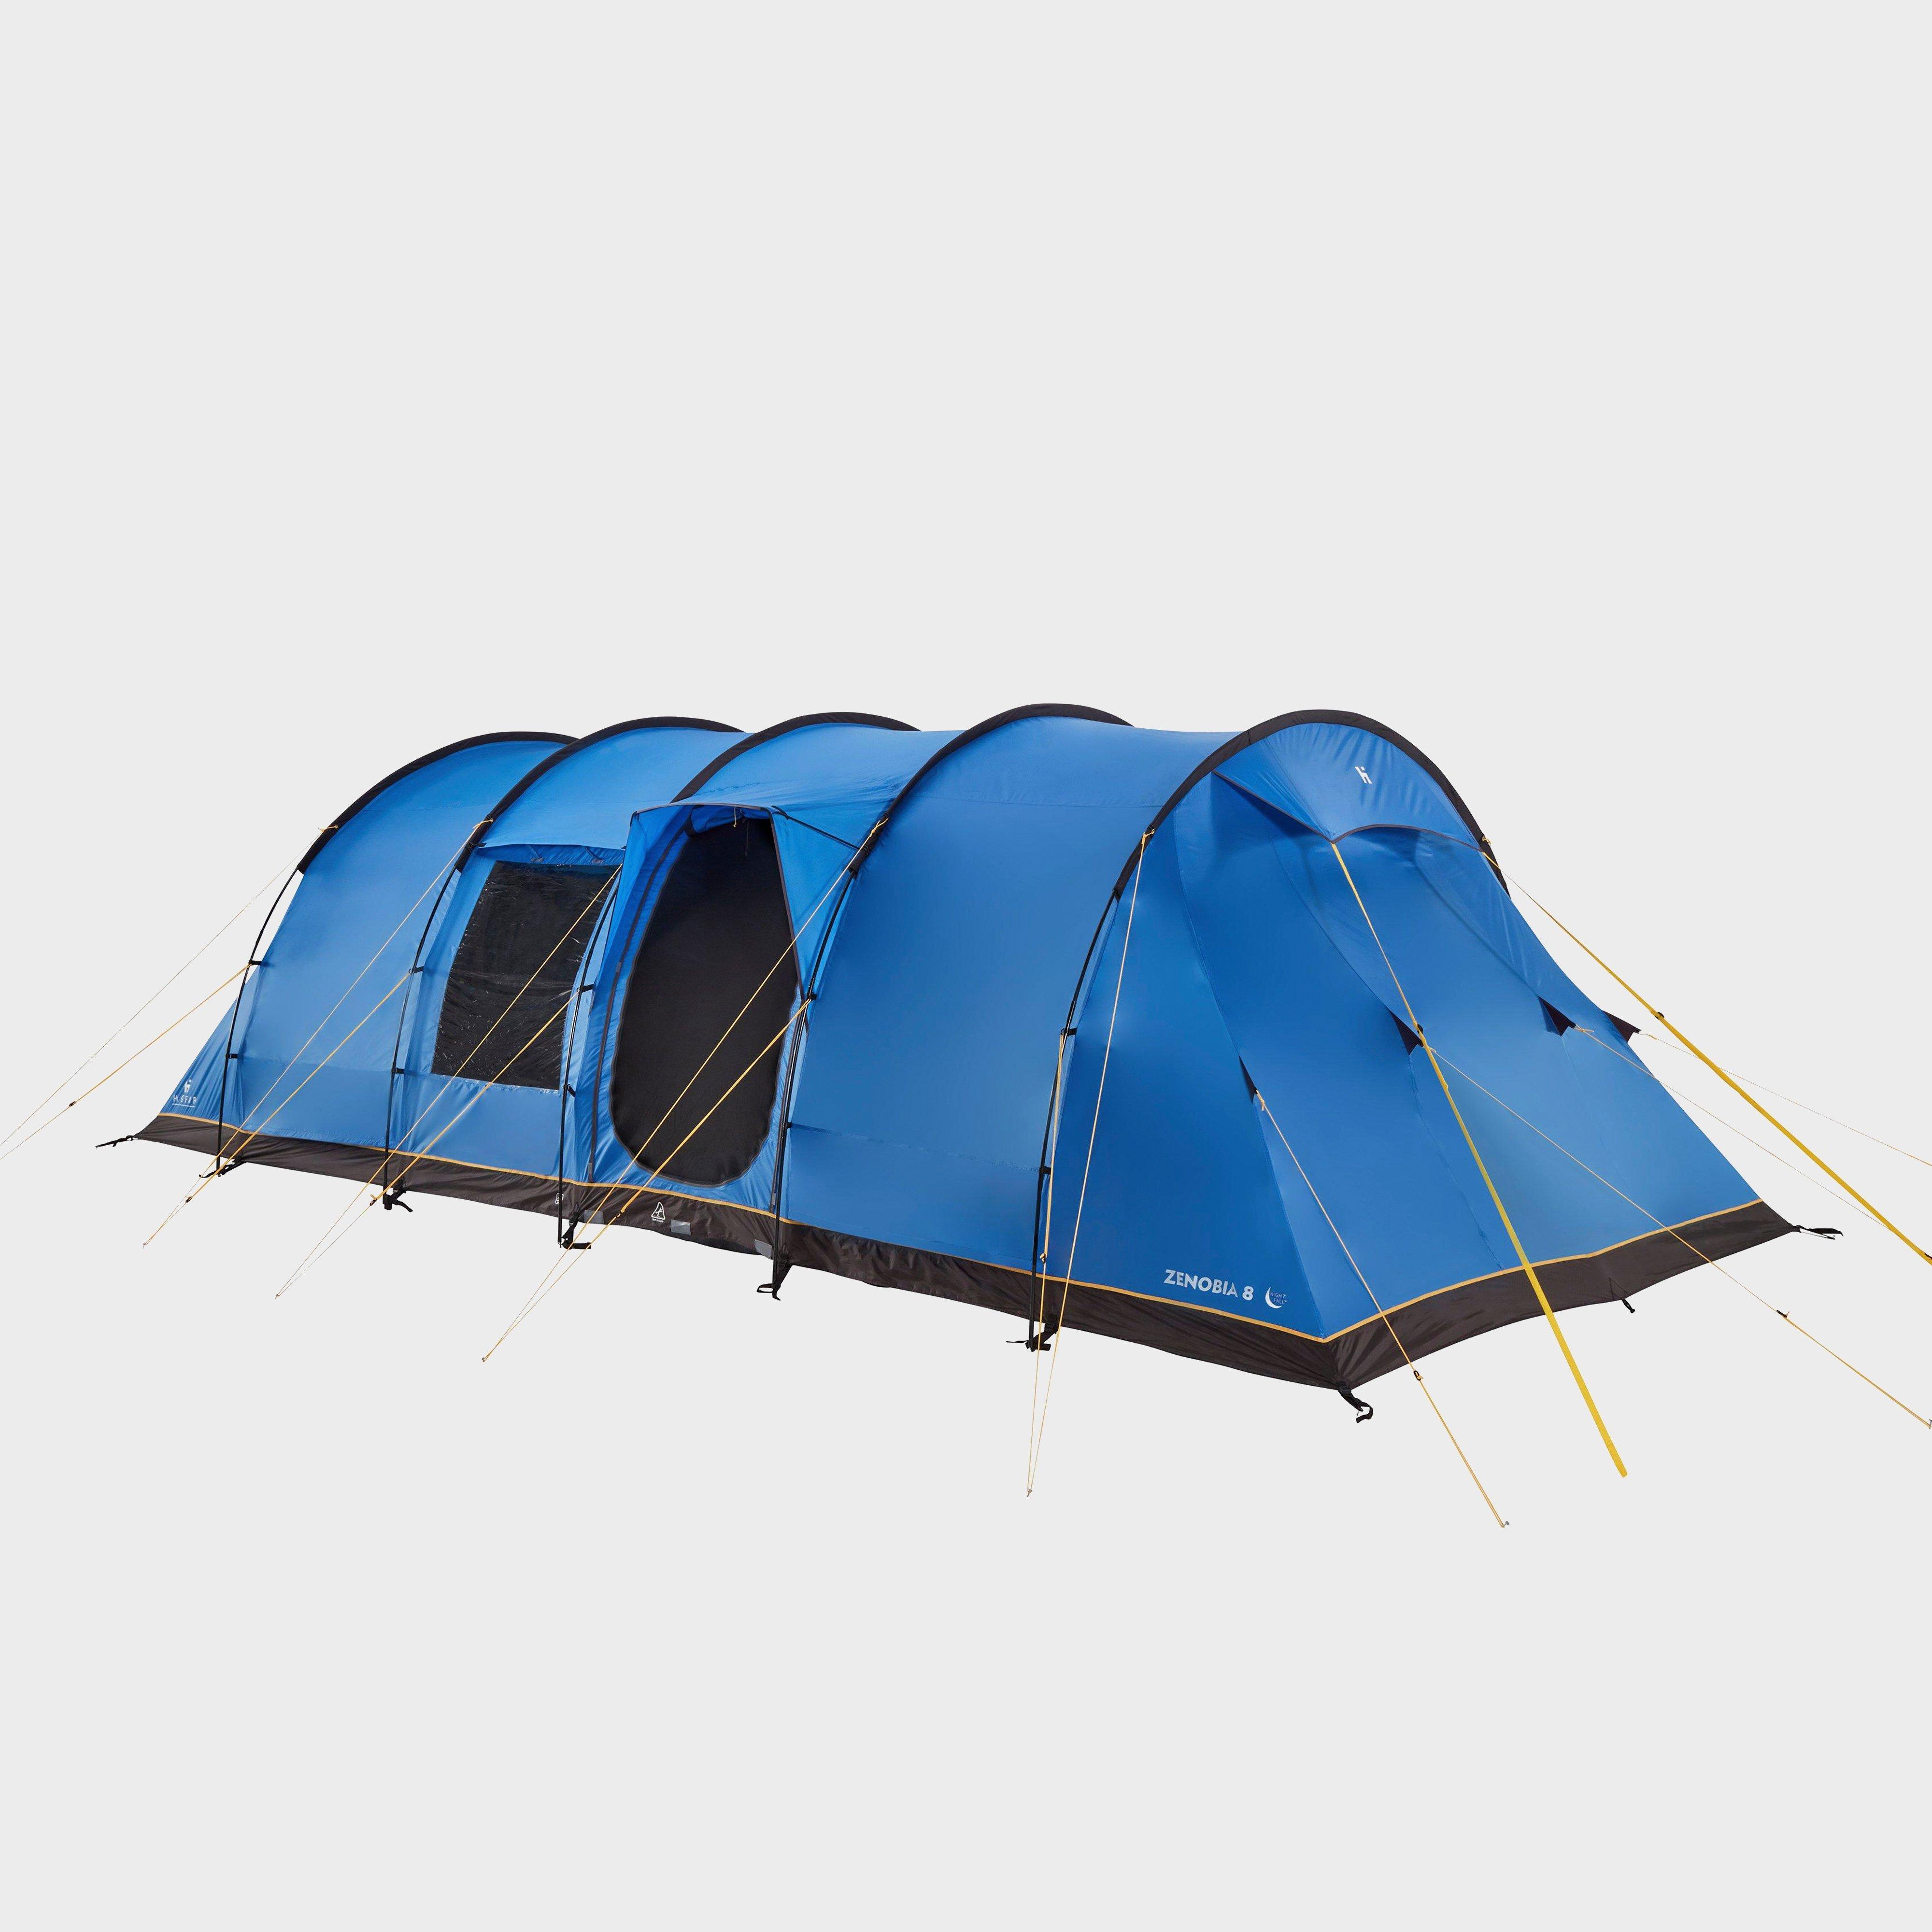 Hi-gear Zenobia 8 Nightfall Tent - Blue/blue  Blue/blue